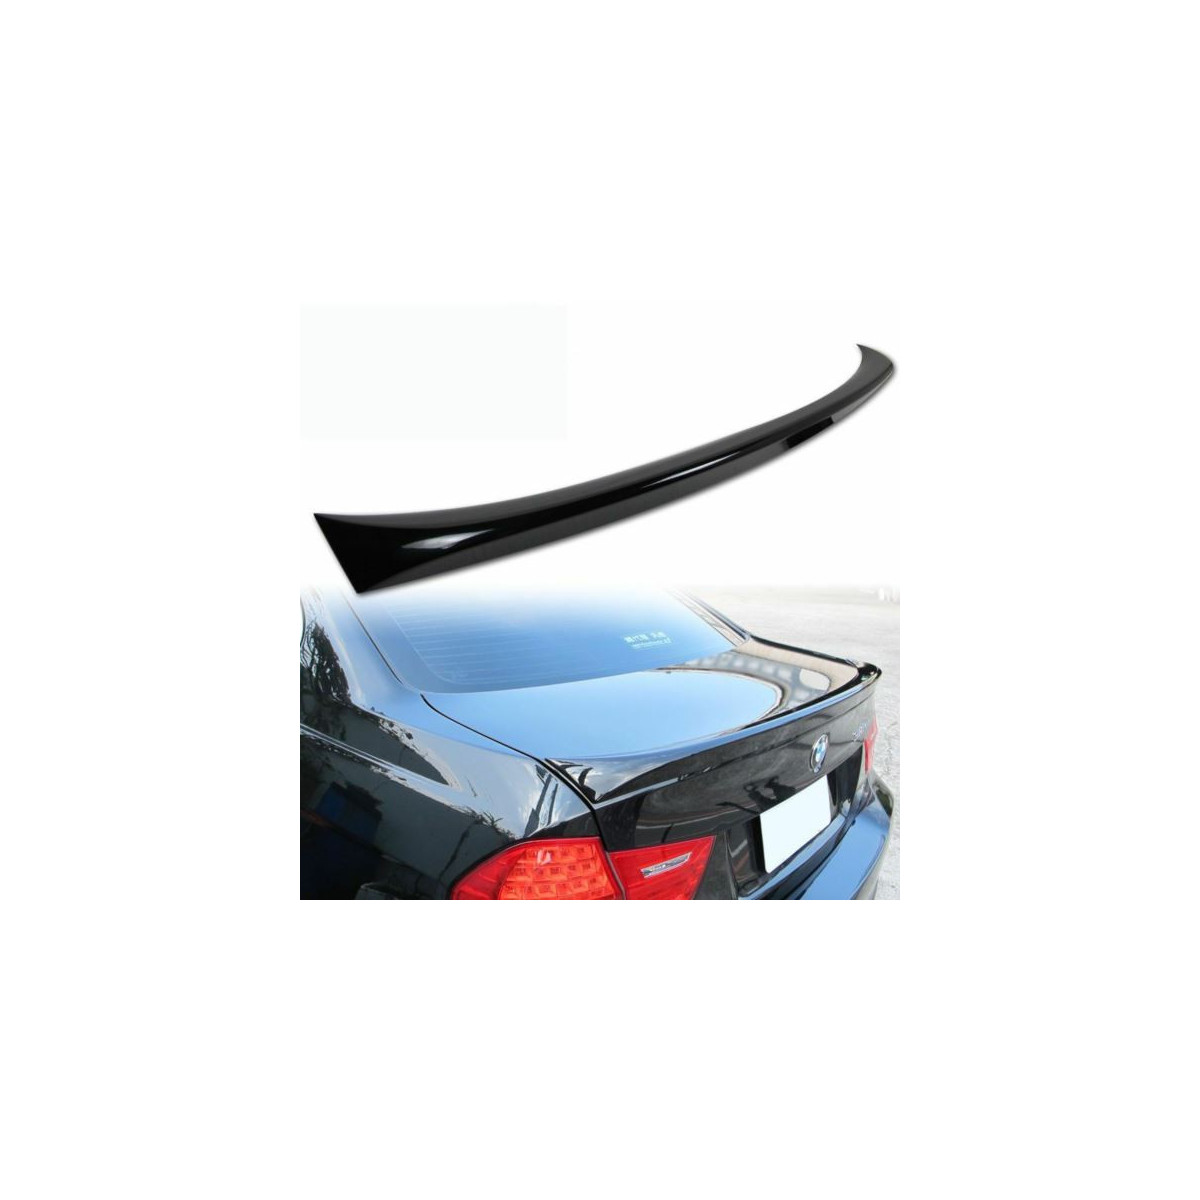 SPOILER BMW E90 05-11 ABS GLOSSY BLACK TRUNK